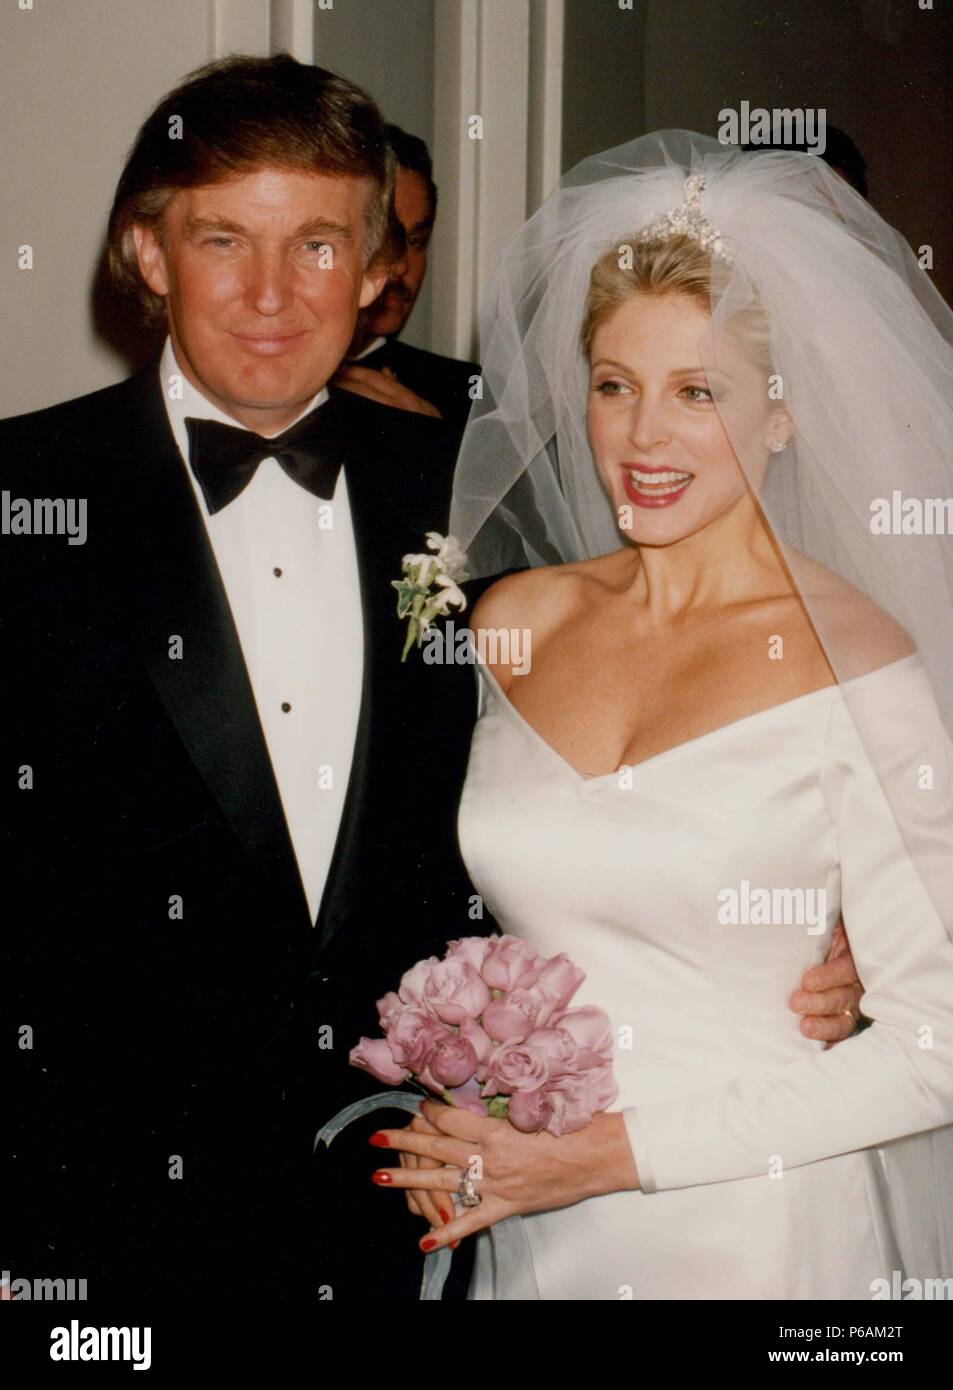 Donald Trump Marla Maples 1993 Photo By John Barrett-PHOTOlink.net / MediaPunch Stock Photo